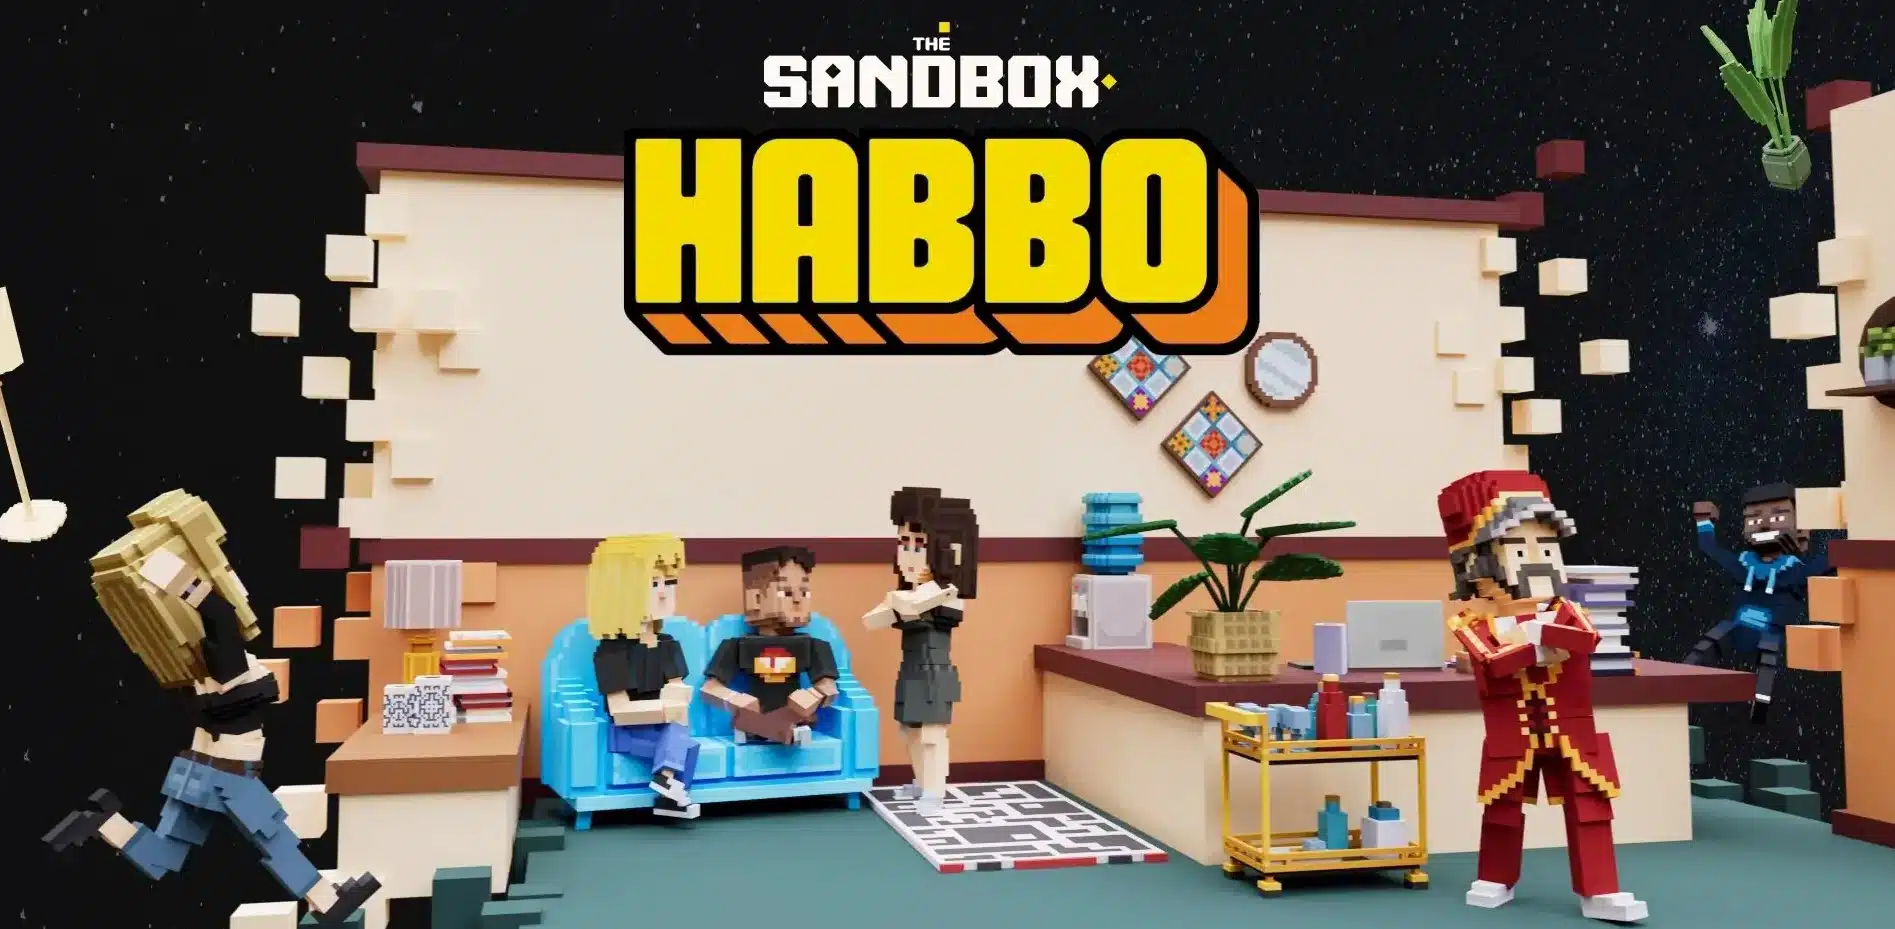 Habbo Hotel Opens A New Resort In The Sandbox Metaverse